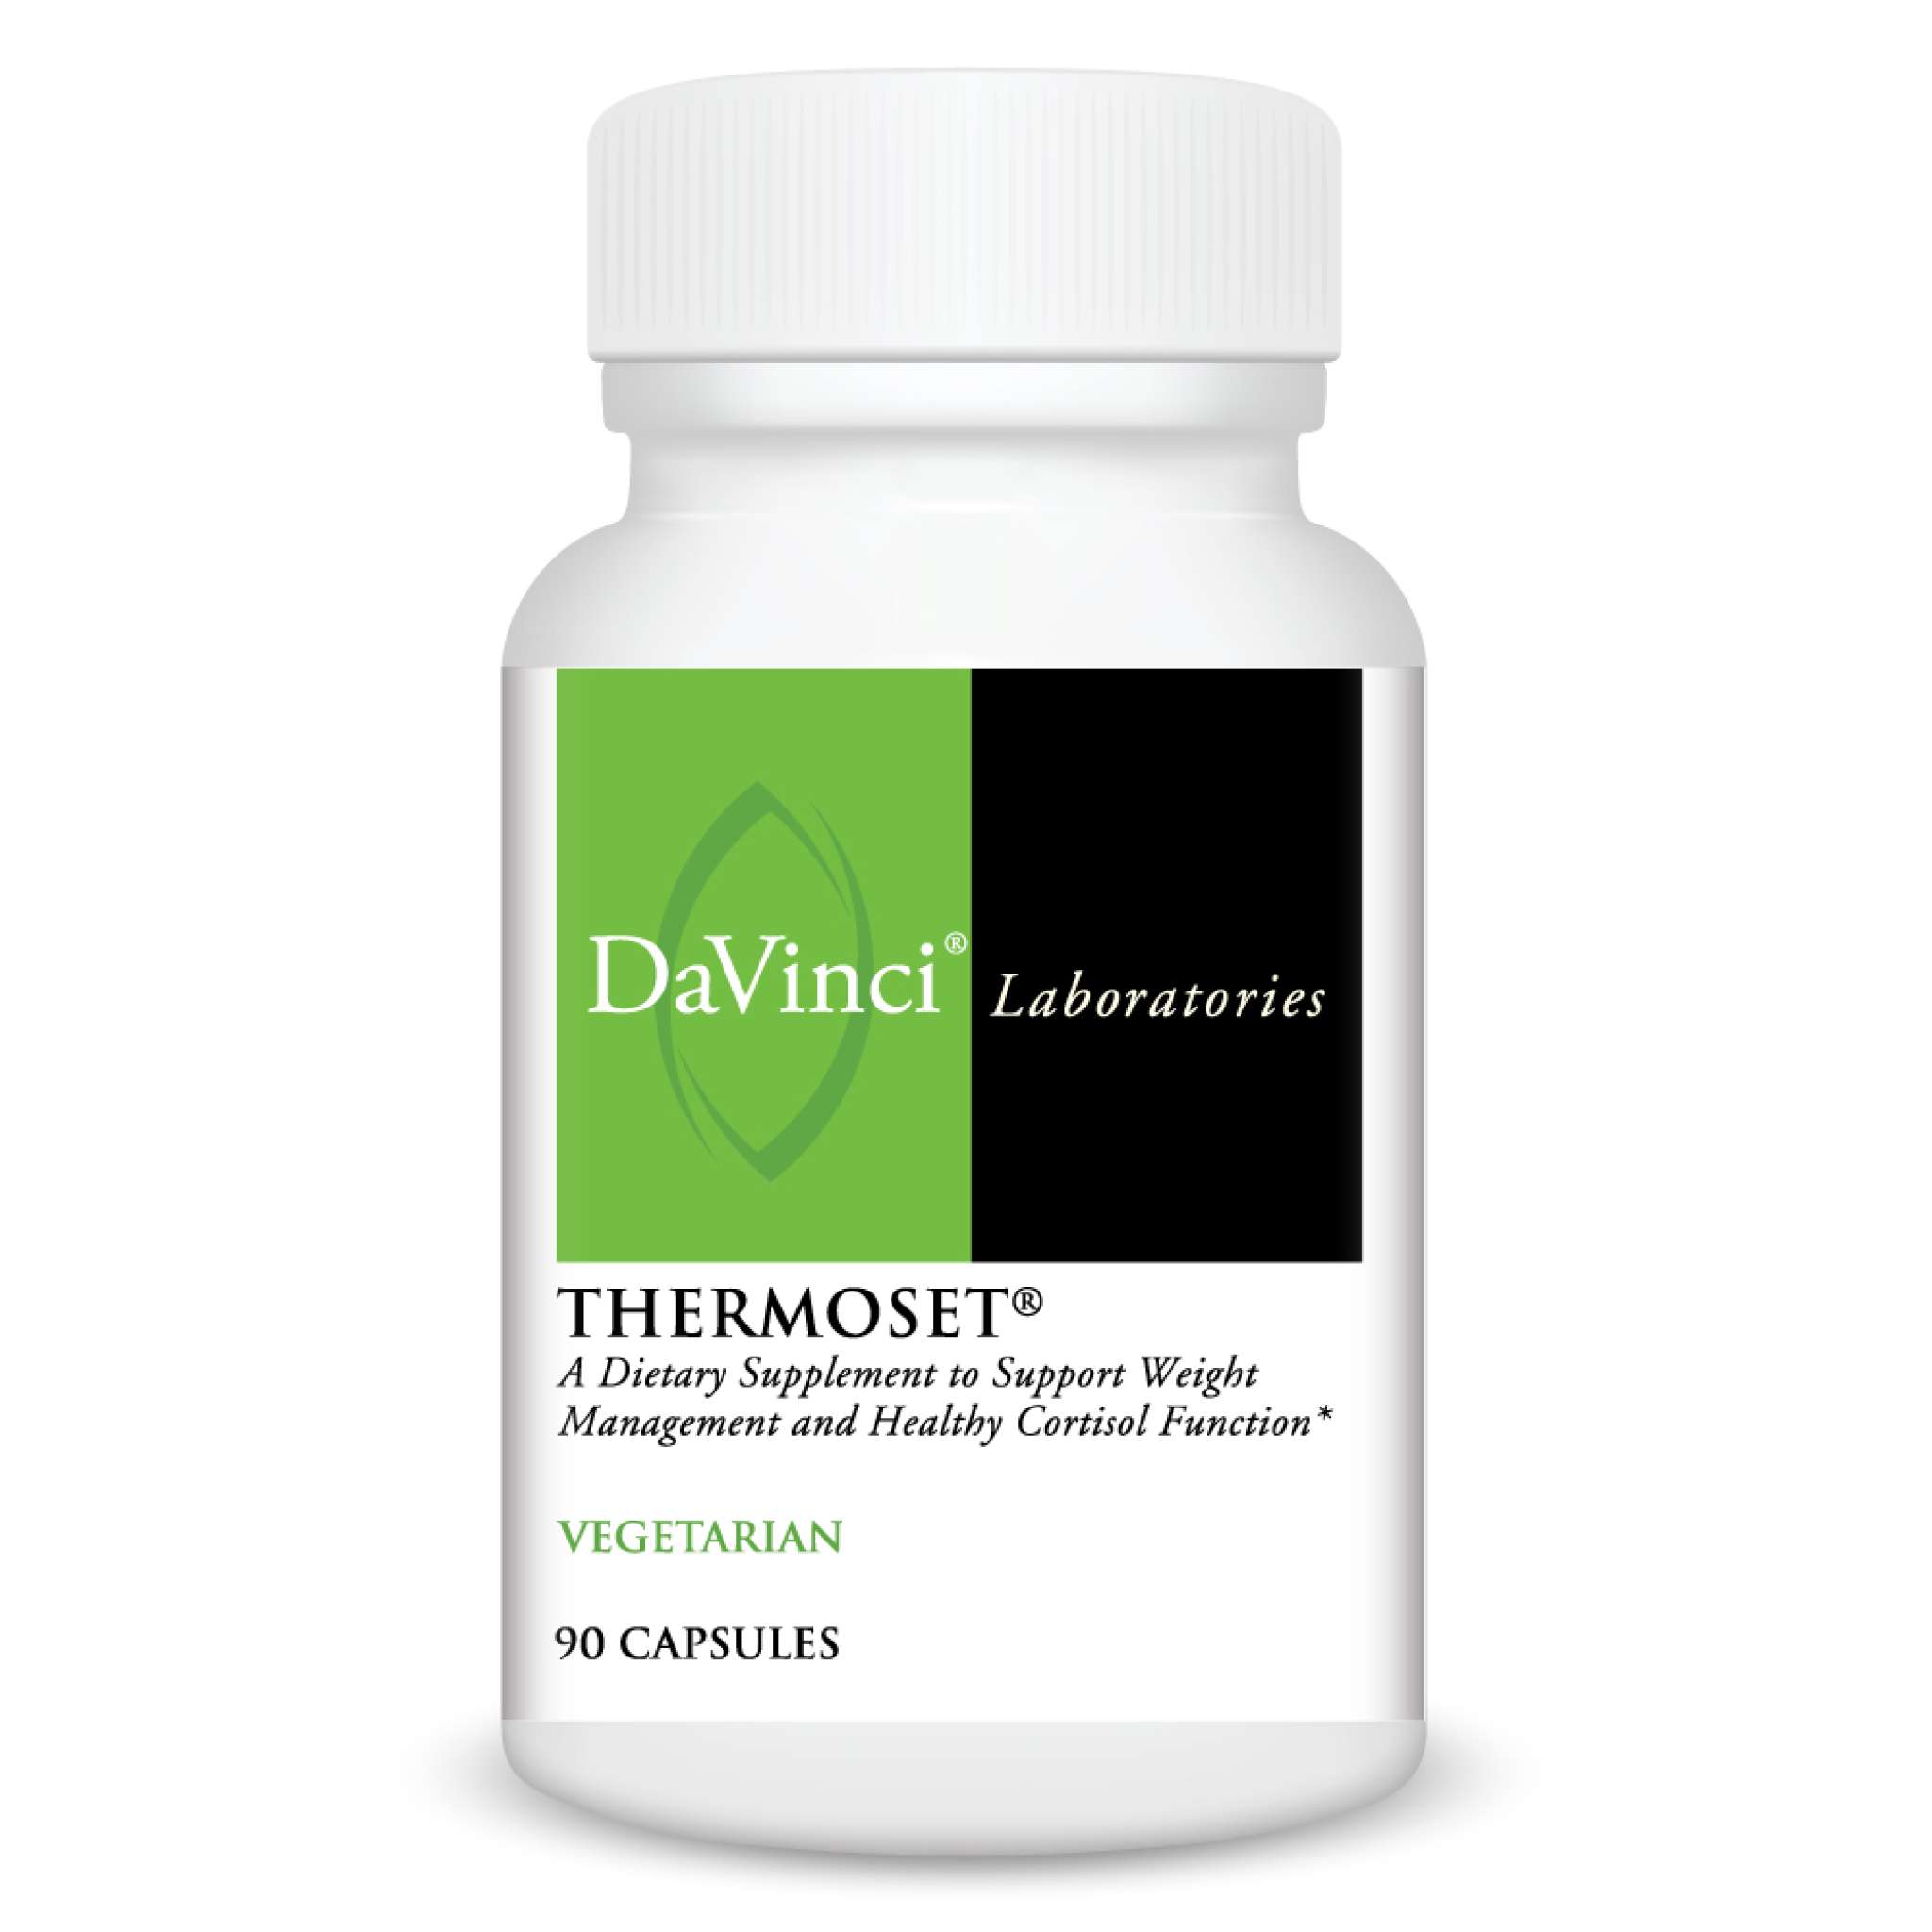 Davinci Laboratories - Thermo Set